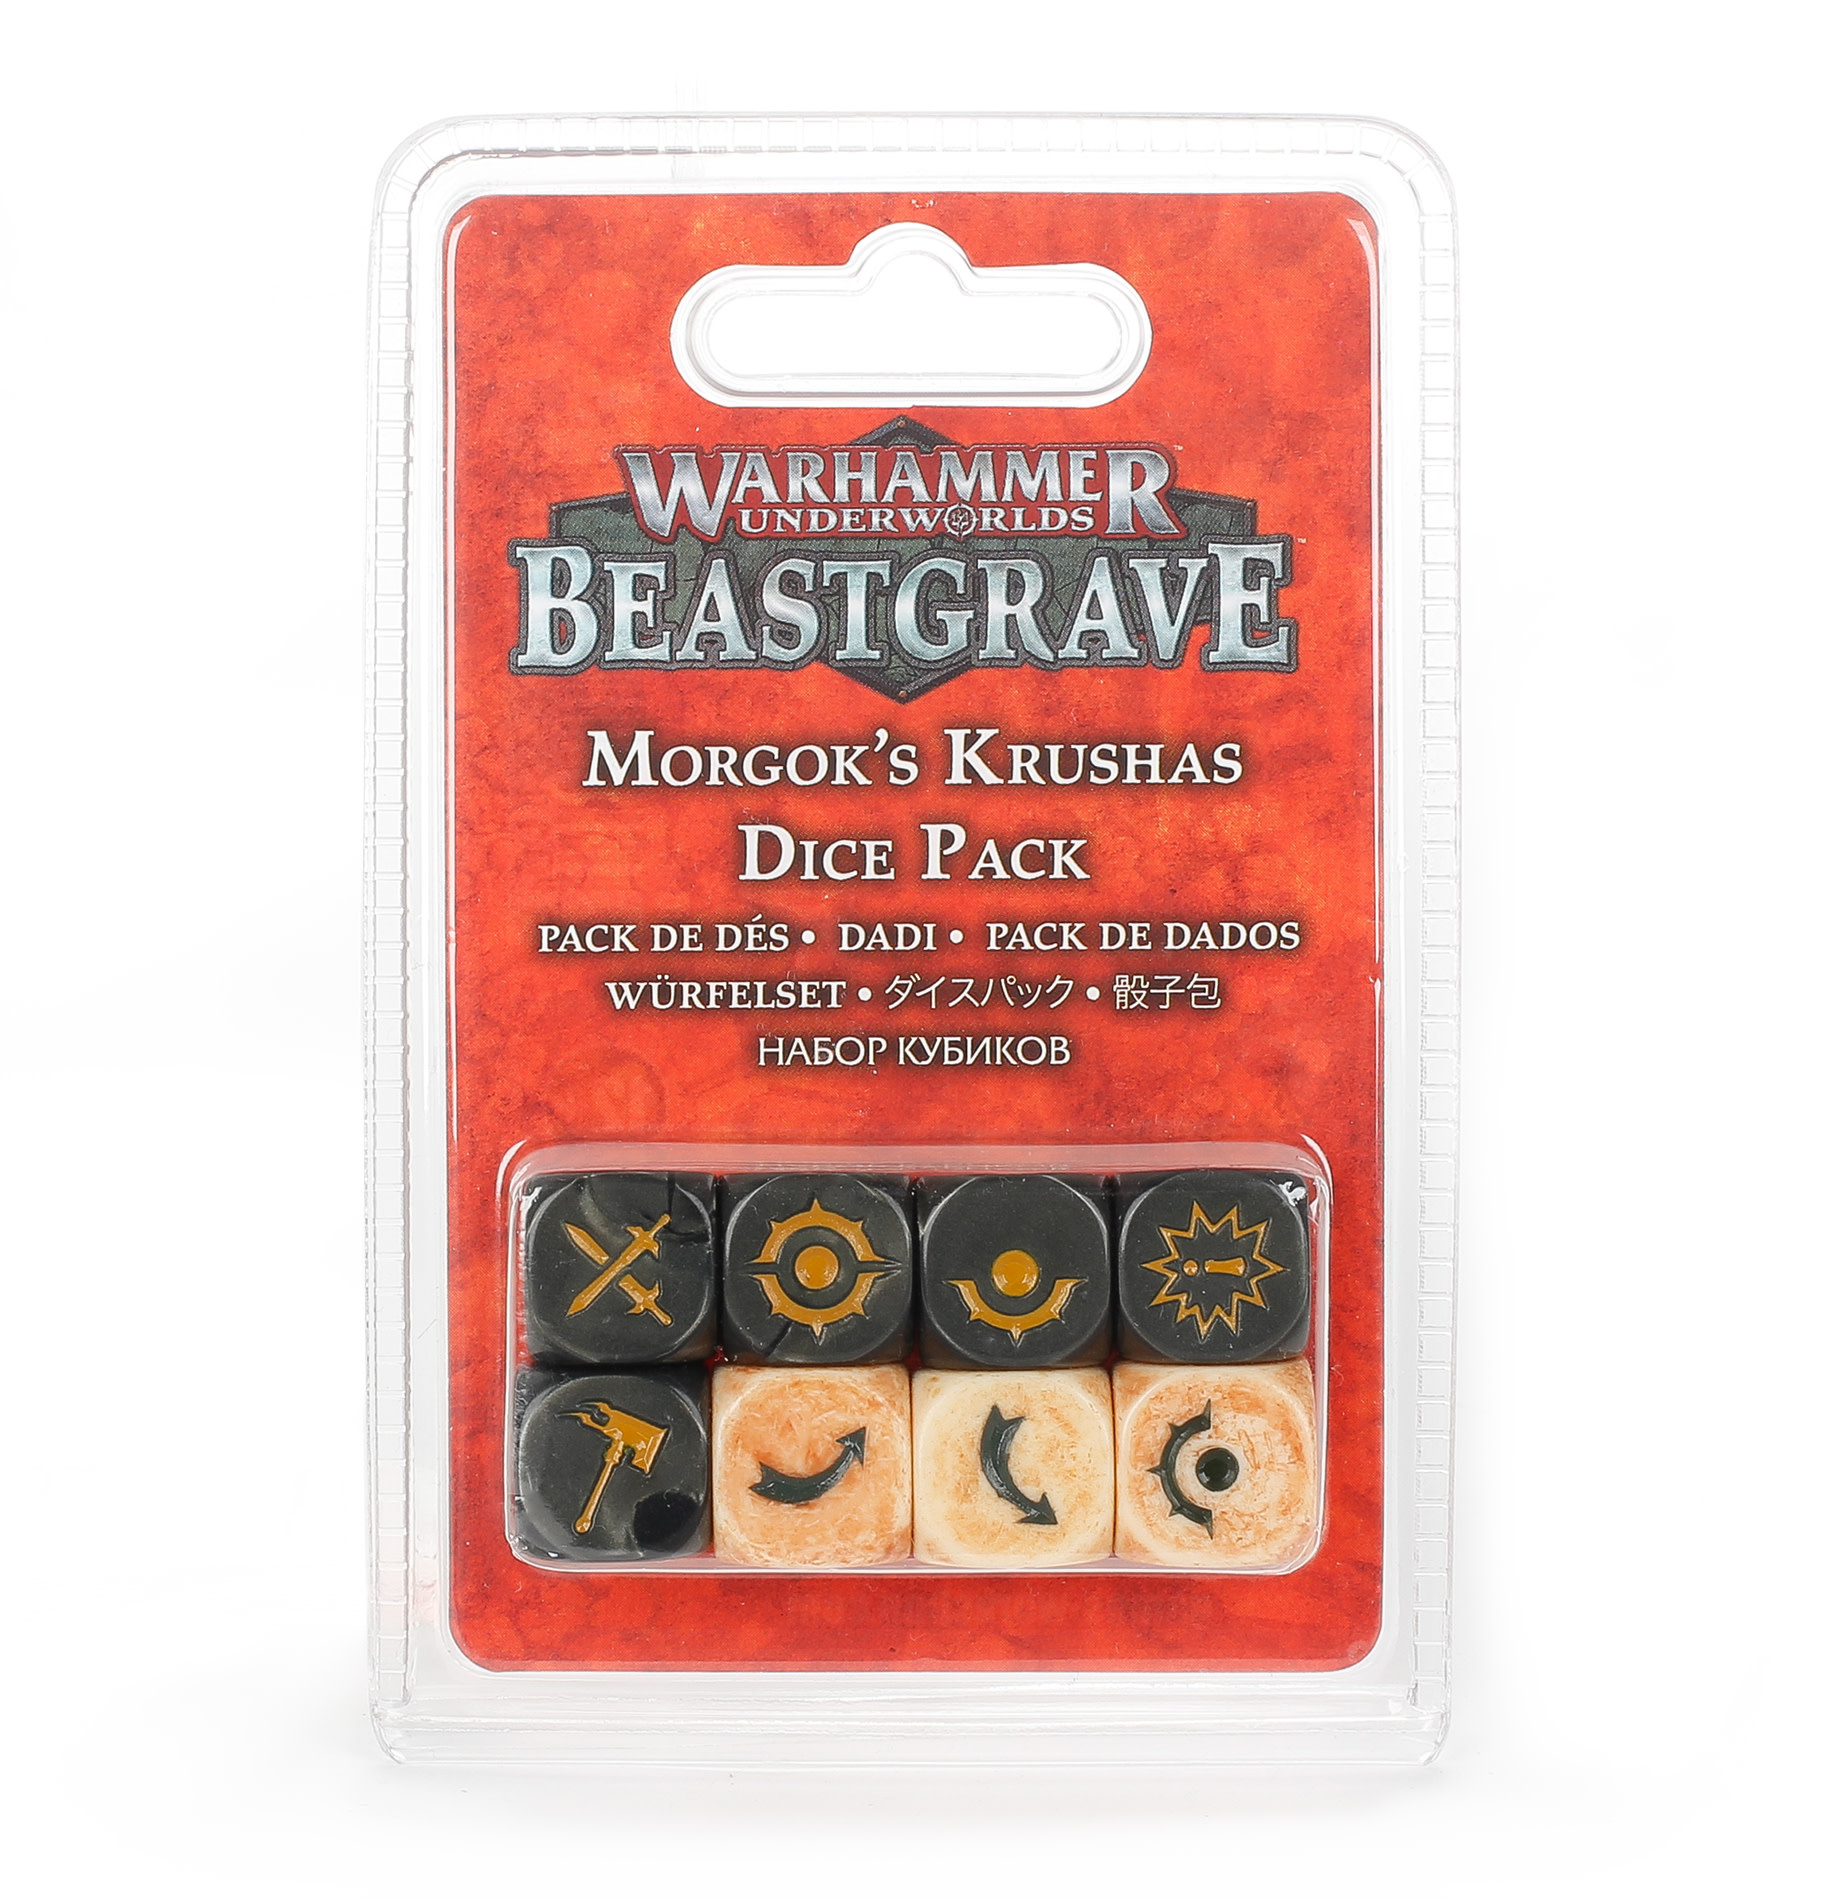 Warhammer Underworlds Beastgrave 110-88 Morgok’s Krushas DE 04120709004